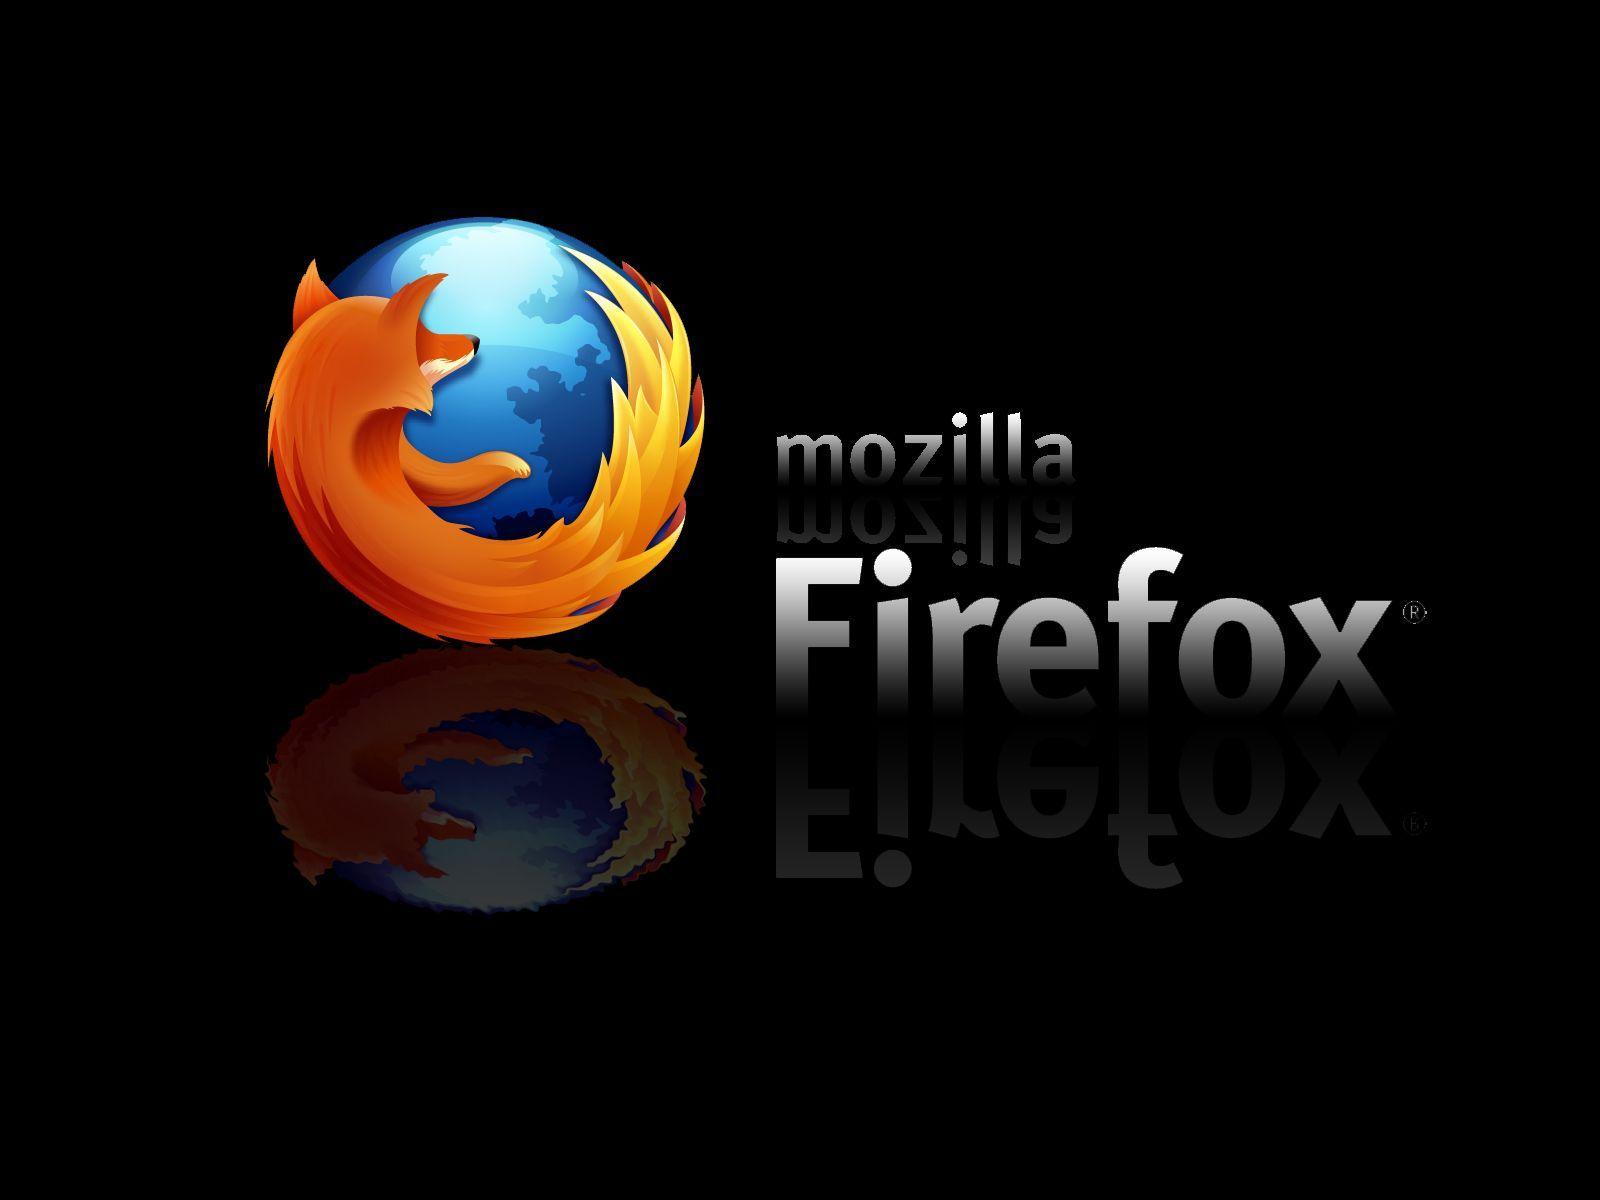 foxfire for mac free download